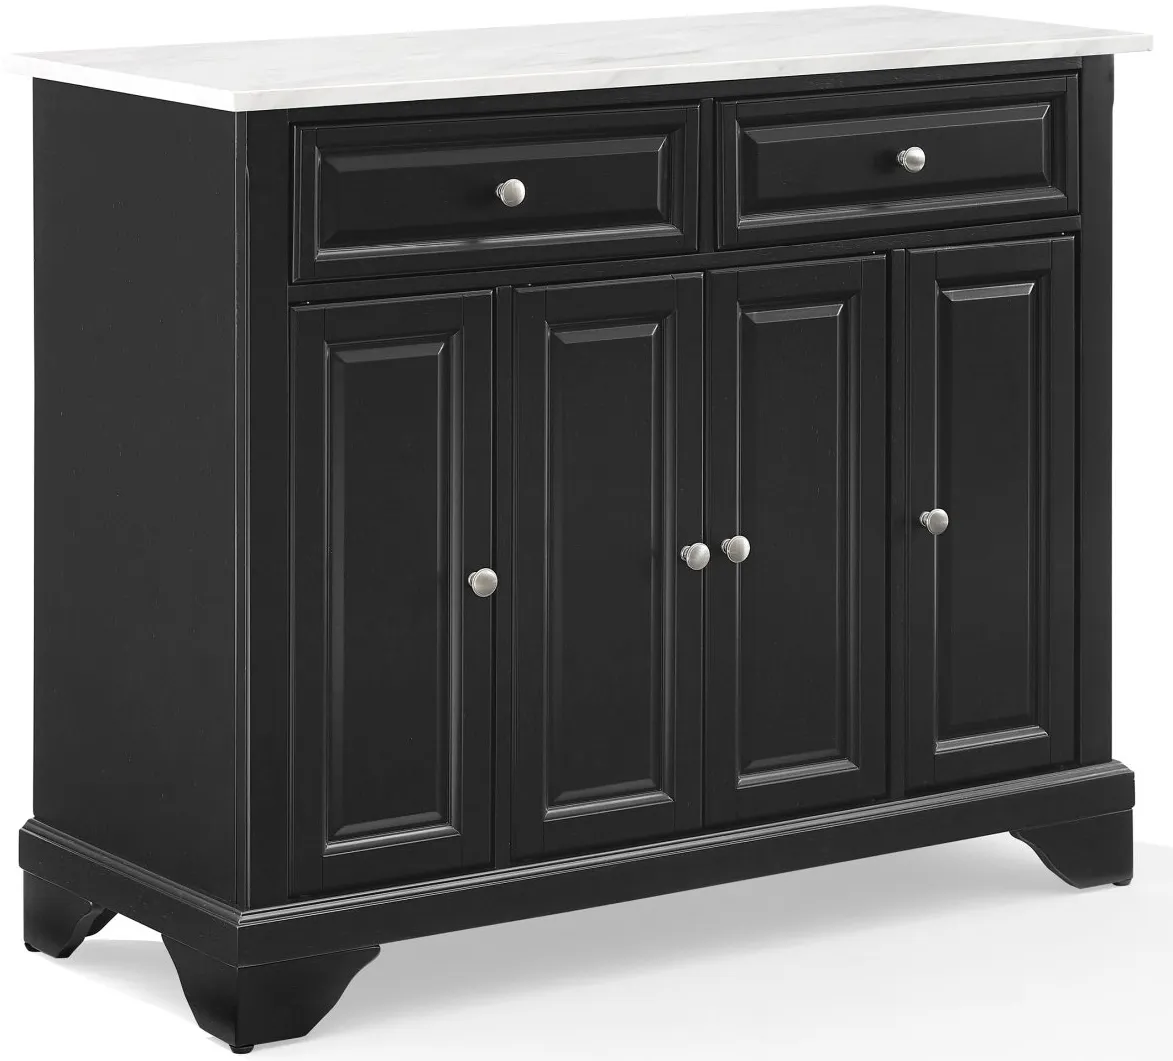 Crosley Furniture® Avery Distressed Black/White Marble Kitchen Island/Cart